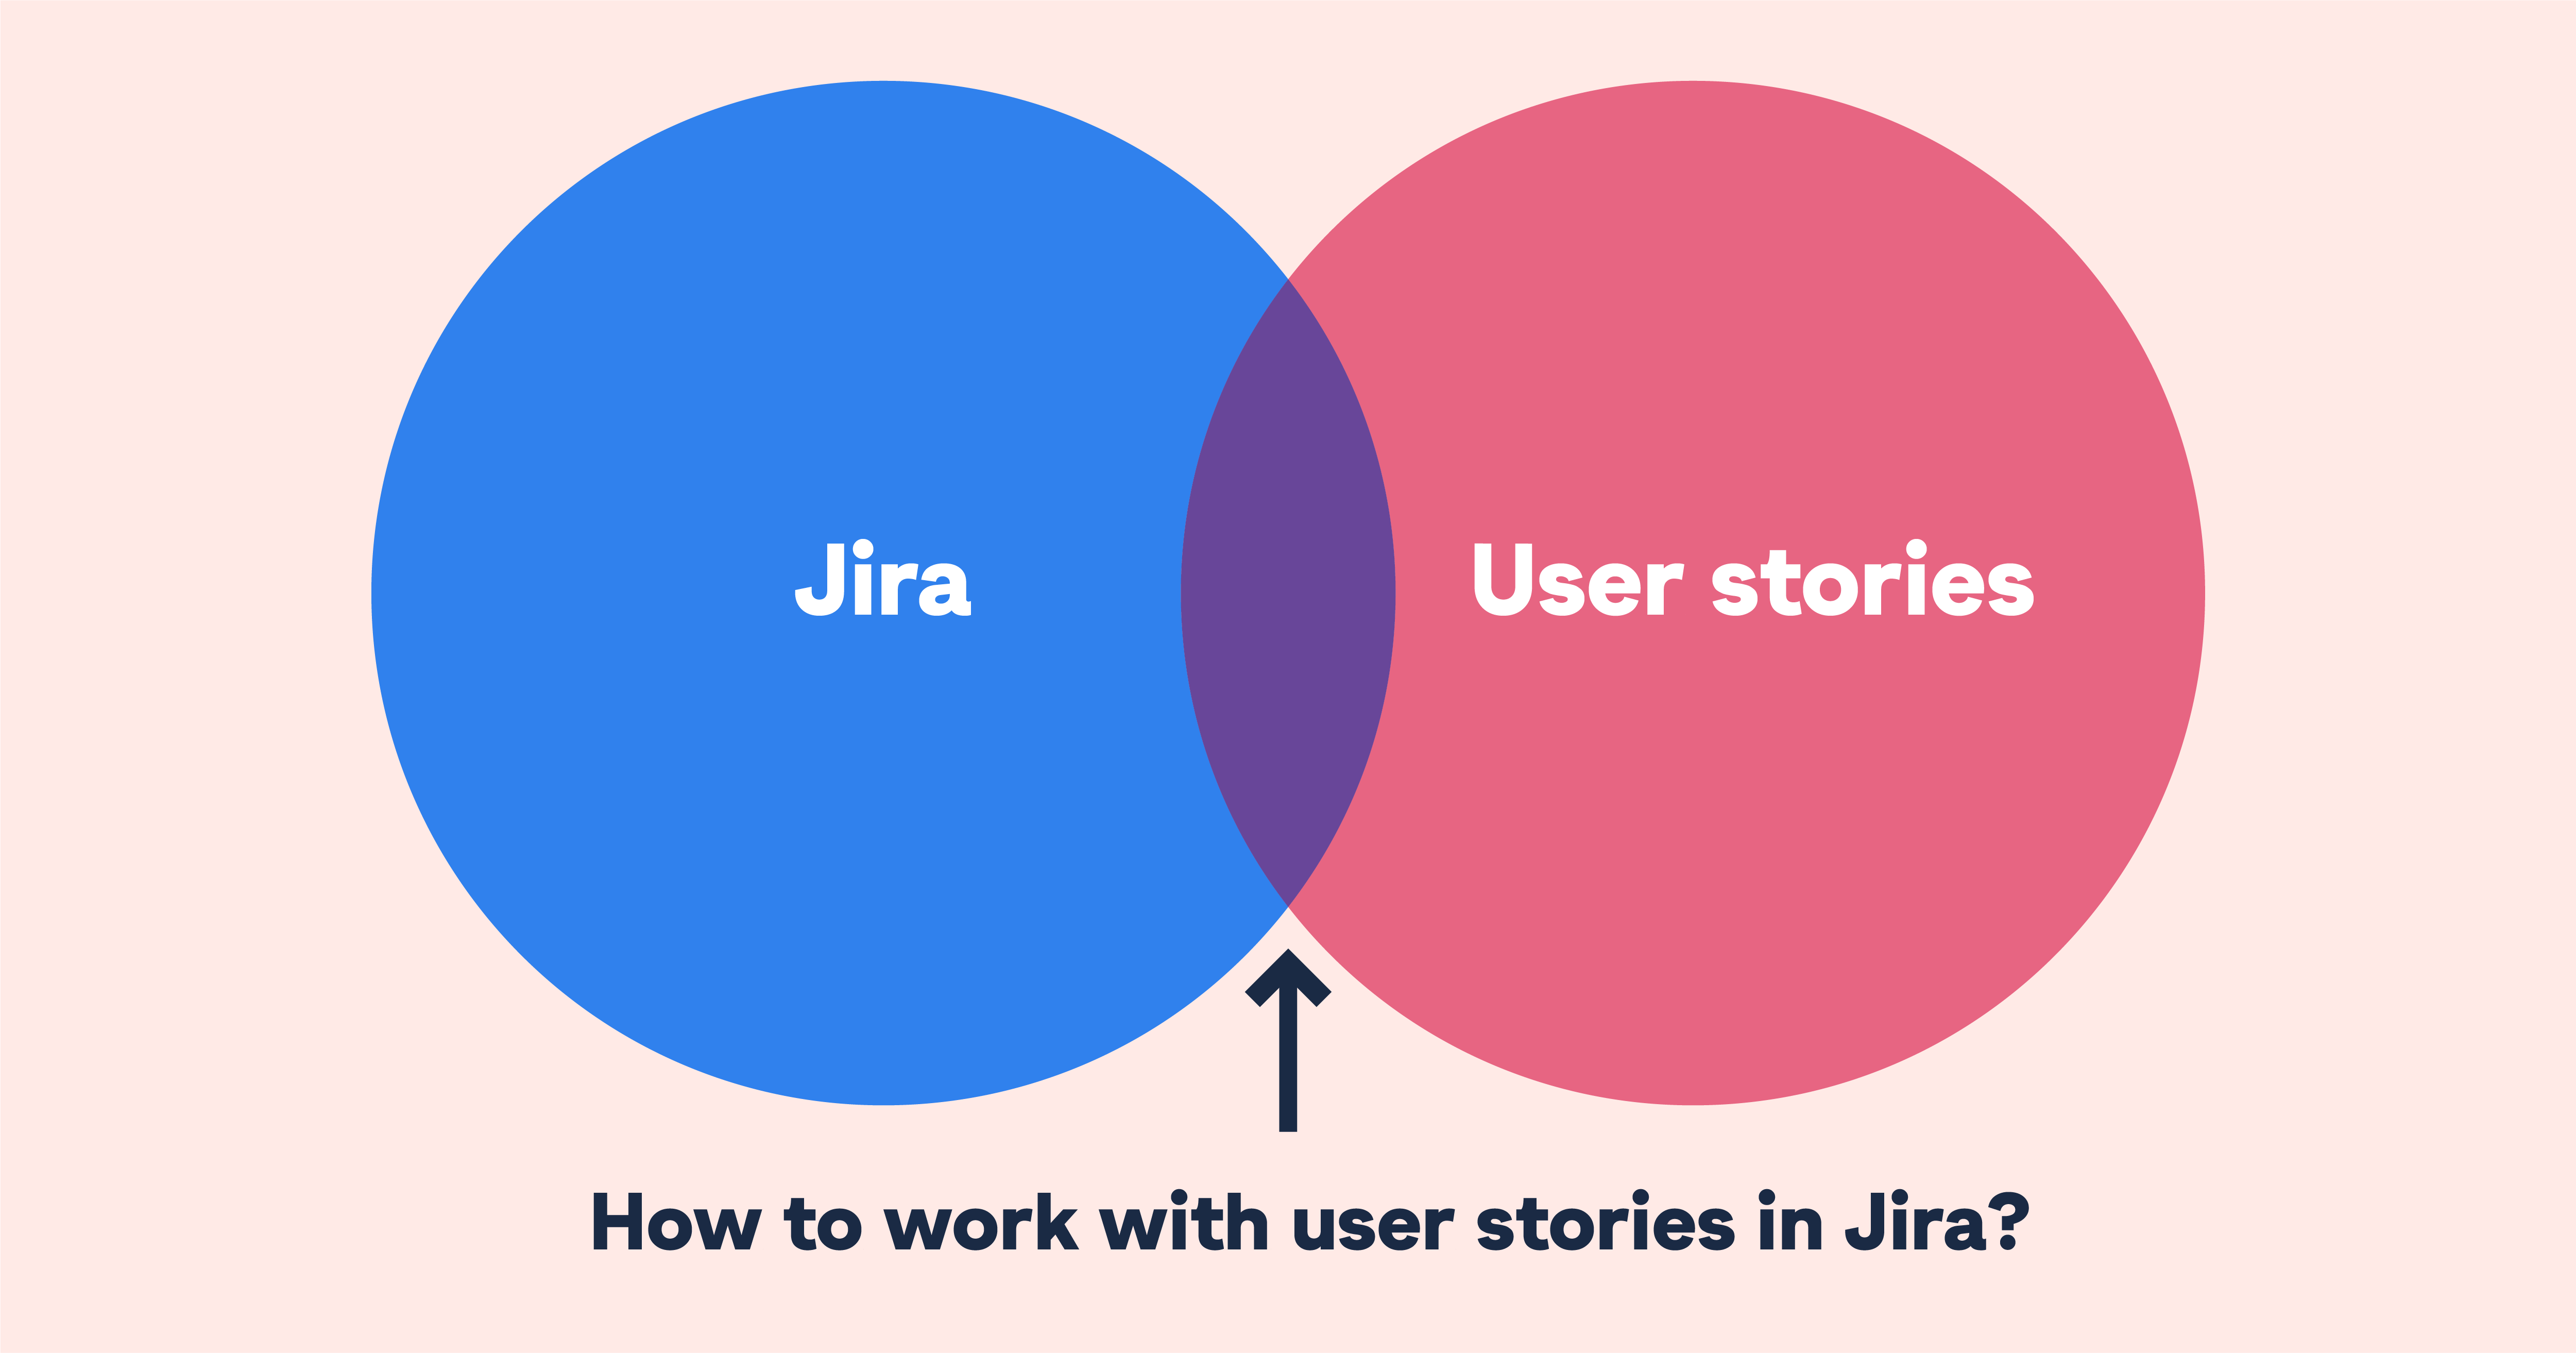 Jira and User stories venn diagram